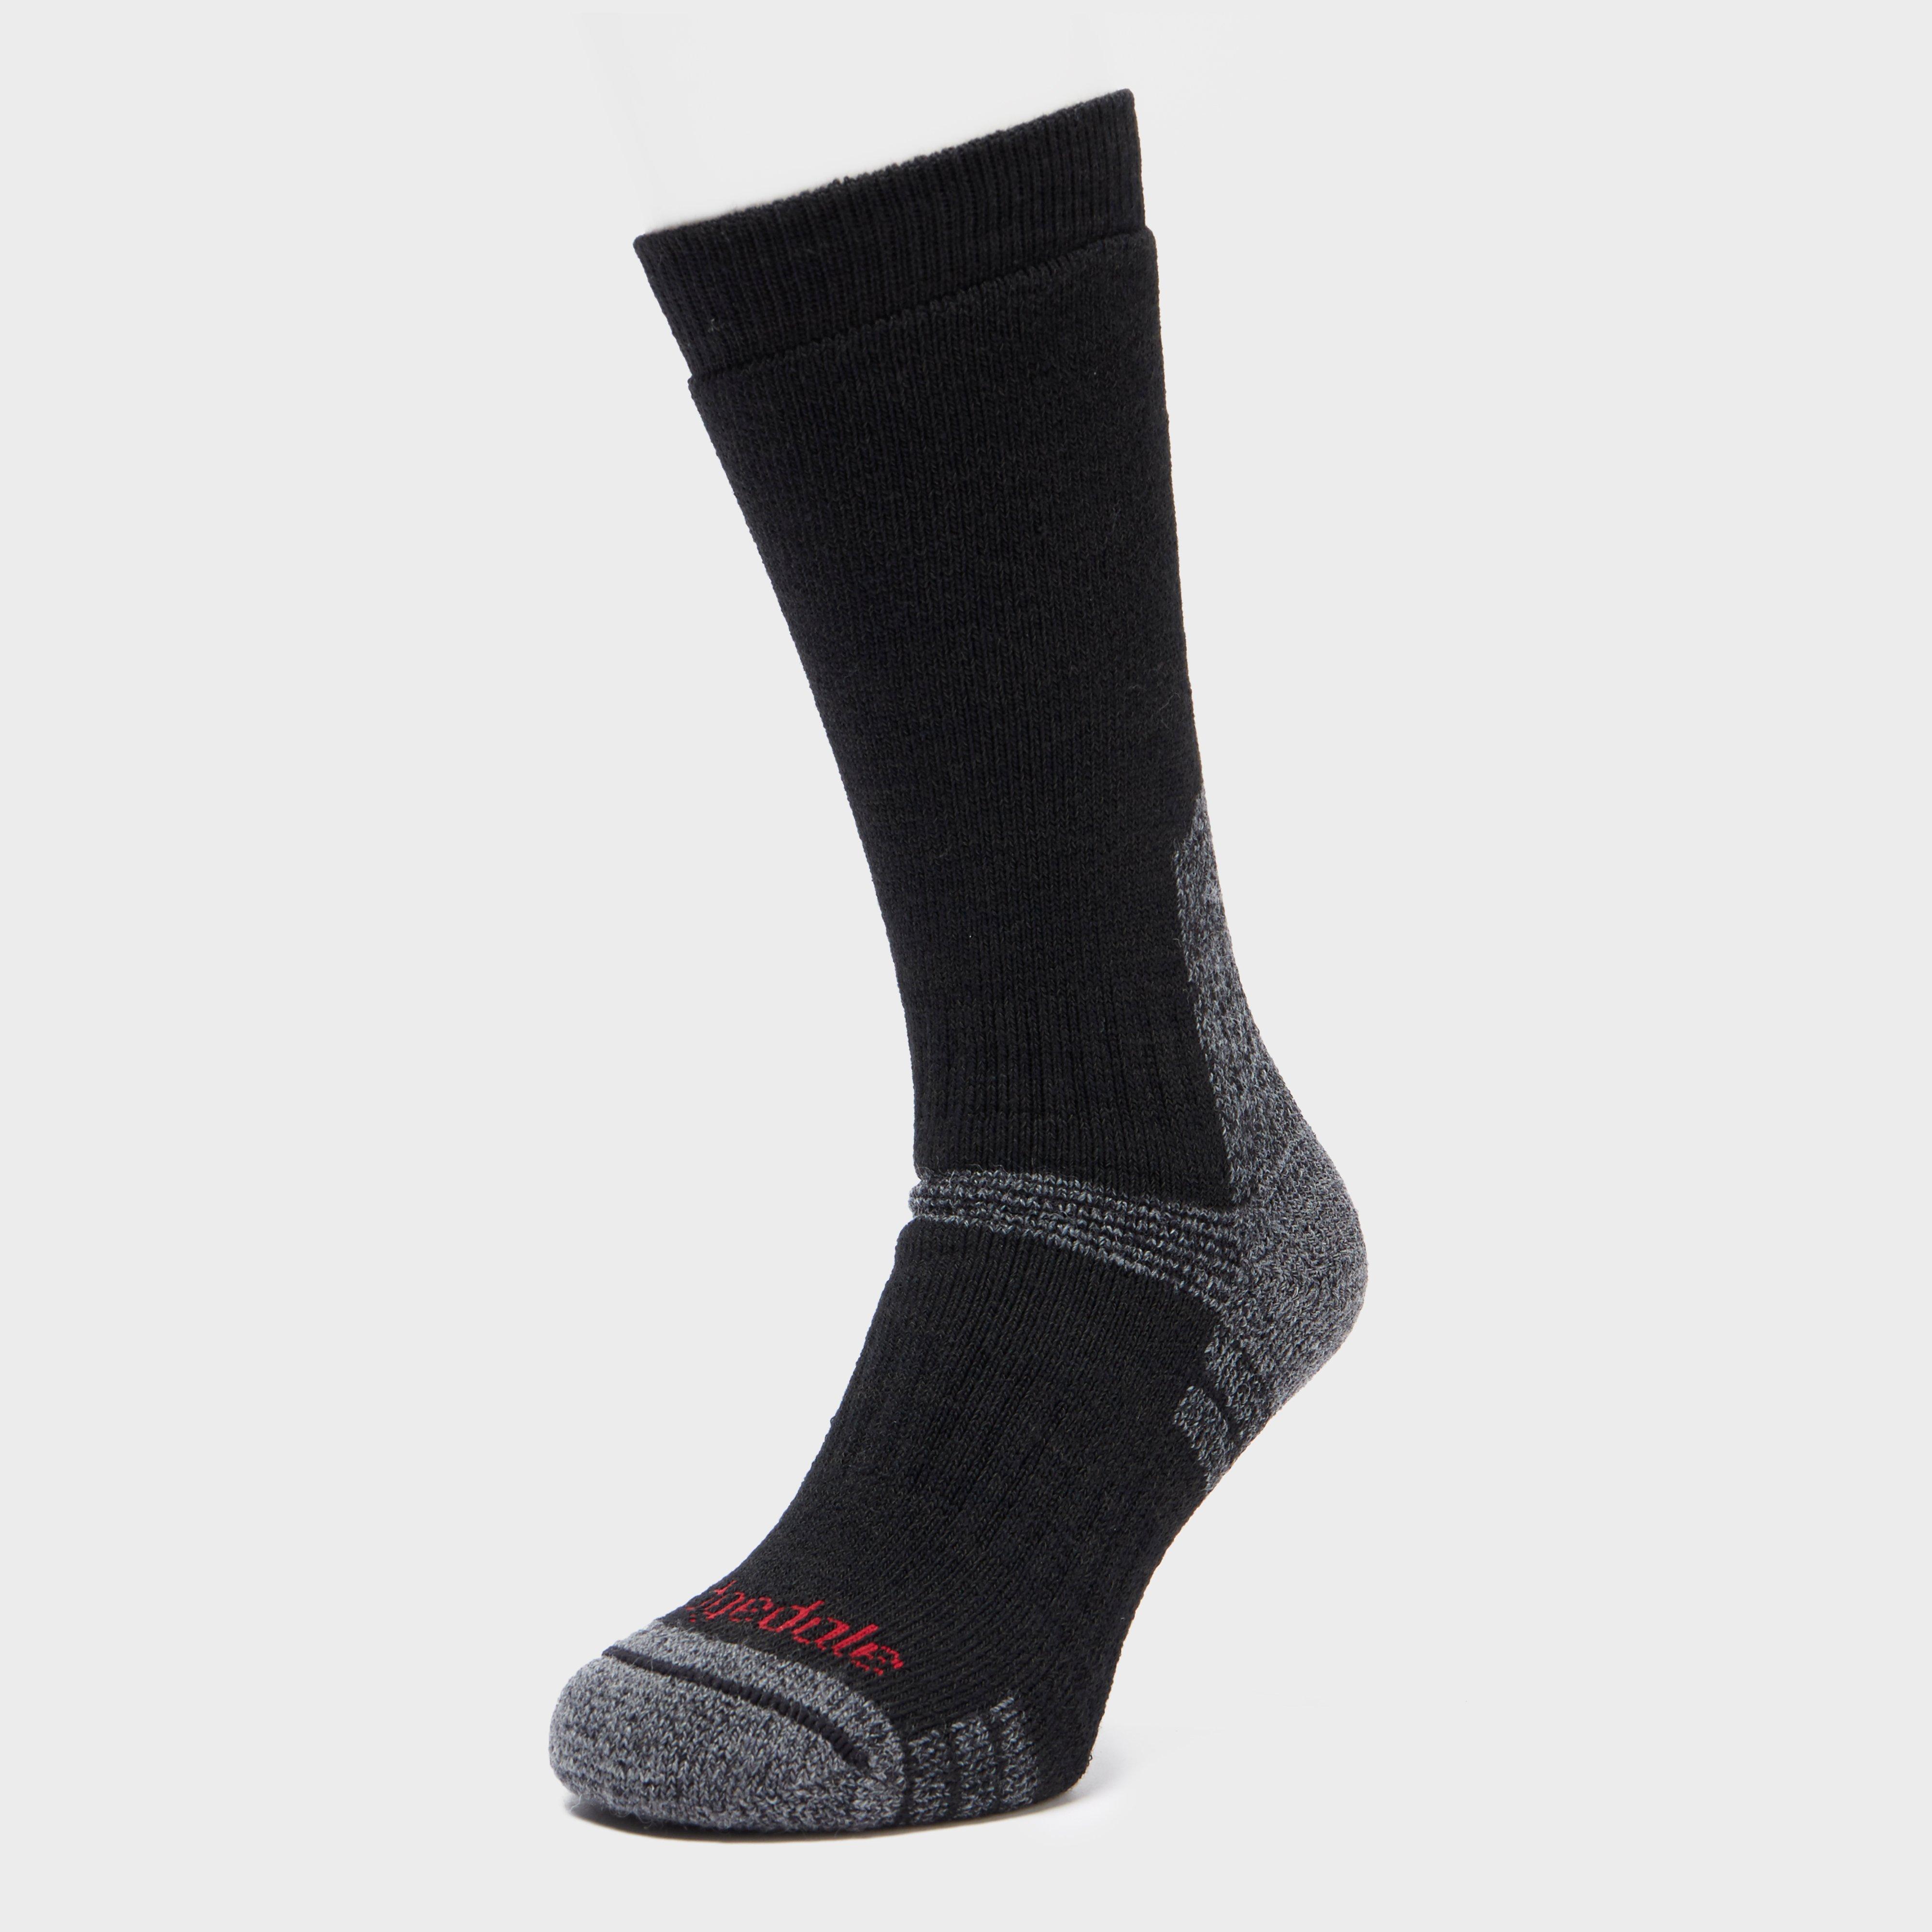 Bridgedale Men's Hike Lightweight Cotton Cool Comfort Boot Socks Review